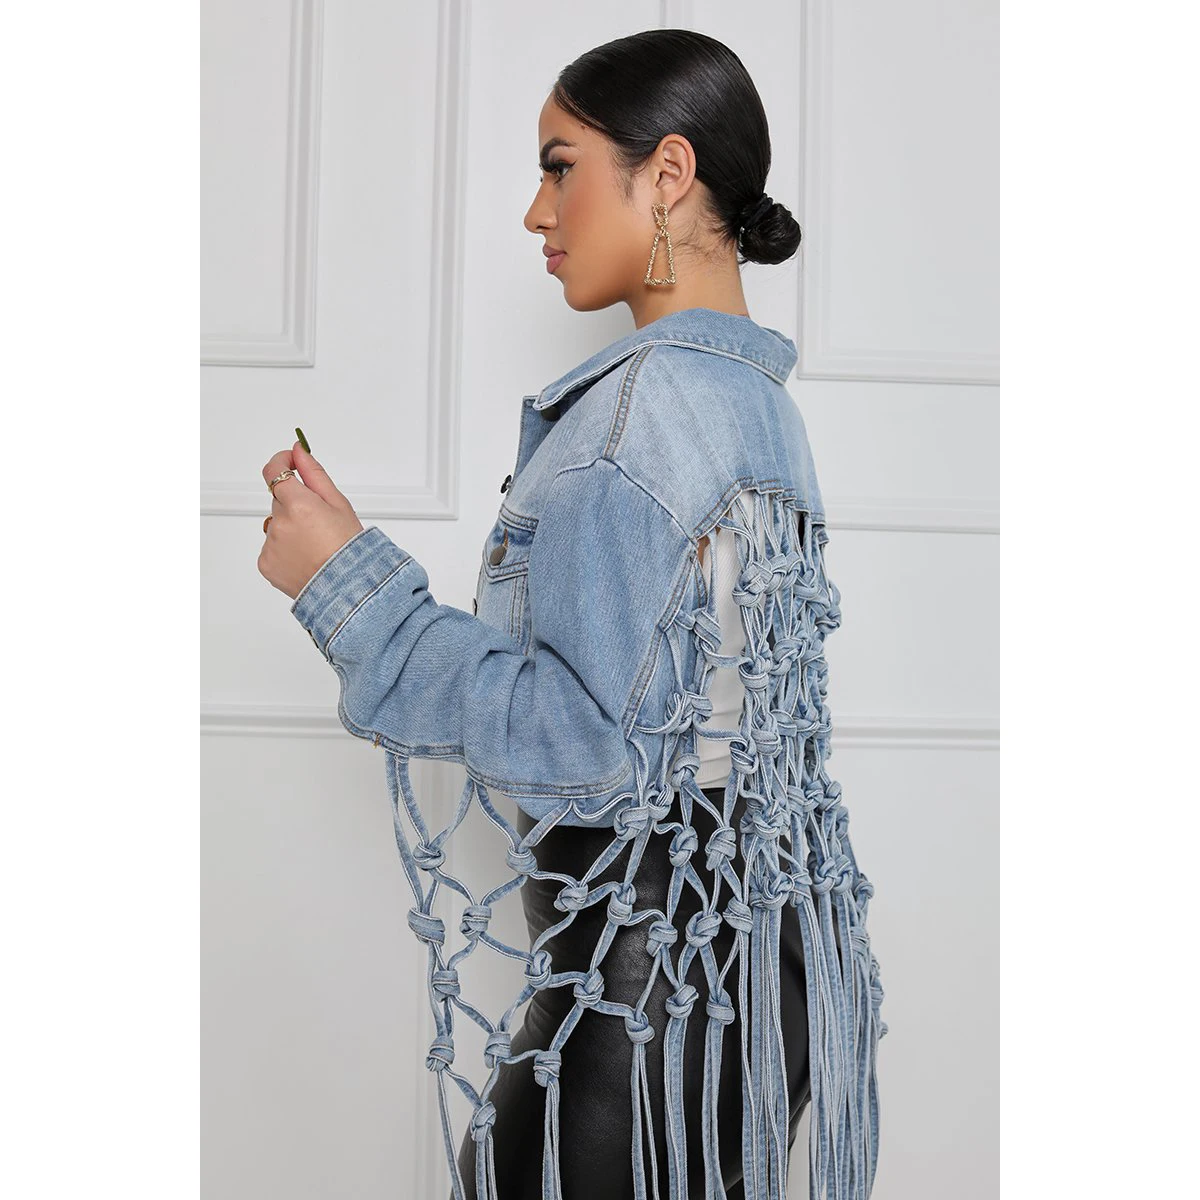 Fit Crop Tops Back Grid Tassel  Denim Jacket for Women Long Sleeve Pocket Jacket Femme Overcoat Single Breasted Chic Jean Coat